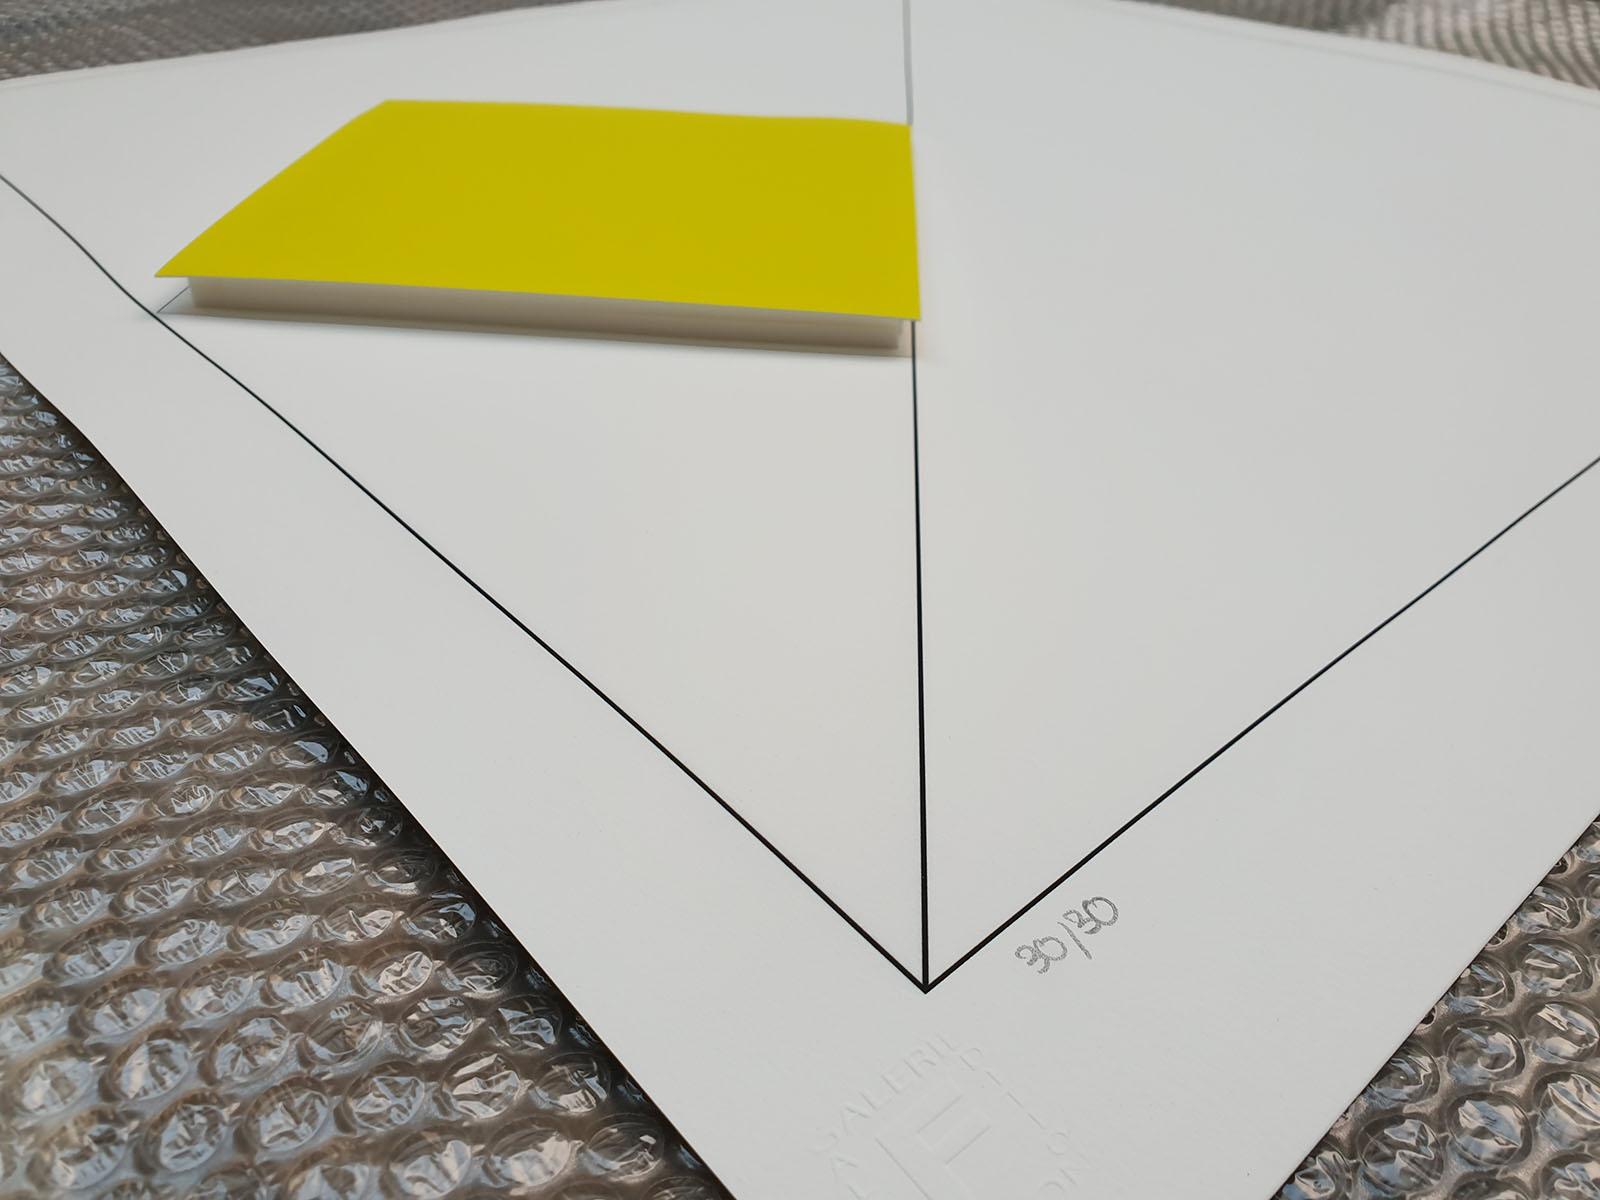 Gottfried Honegger Composition 1 3D square (yellow) 2015 For Sale 2